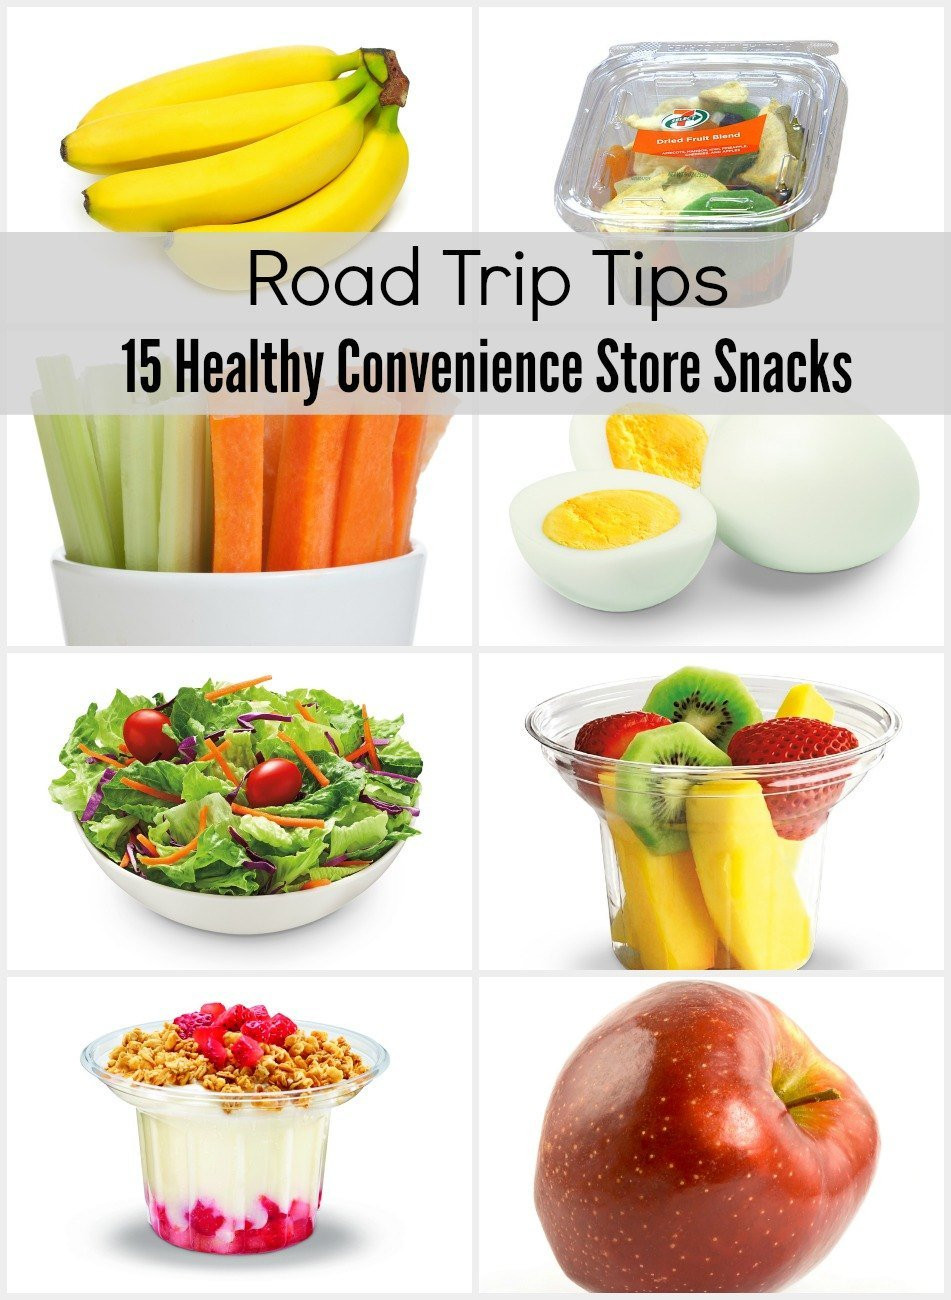 Healthy Convenience Store Snacks
 15 Healthy Convenience Store Snacks for a Road Trip La